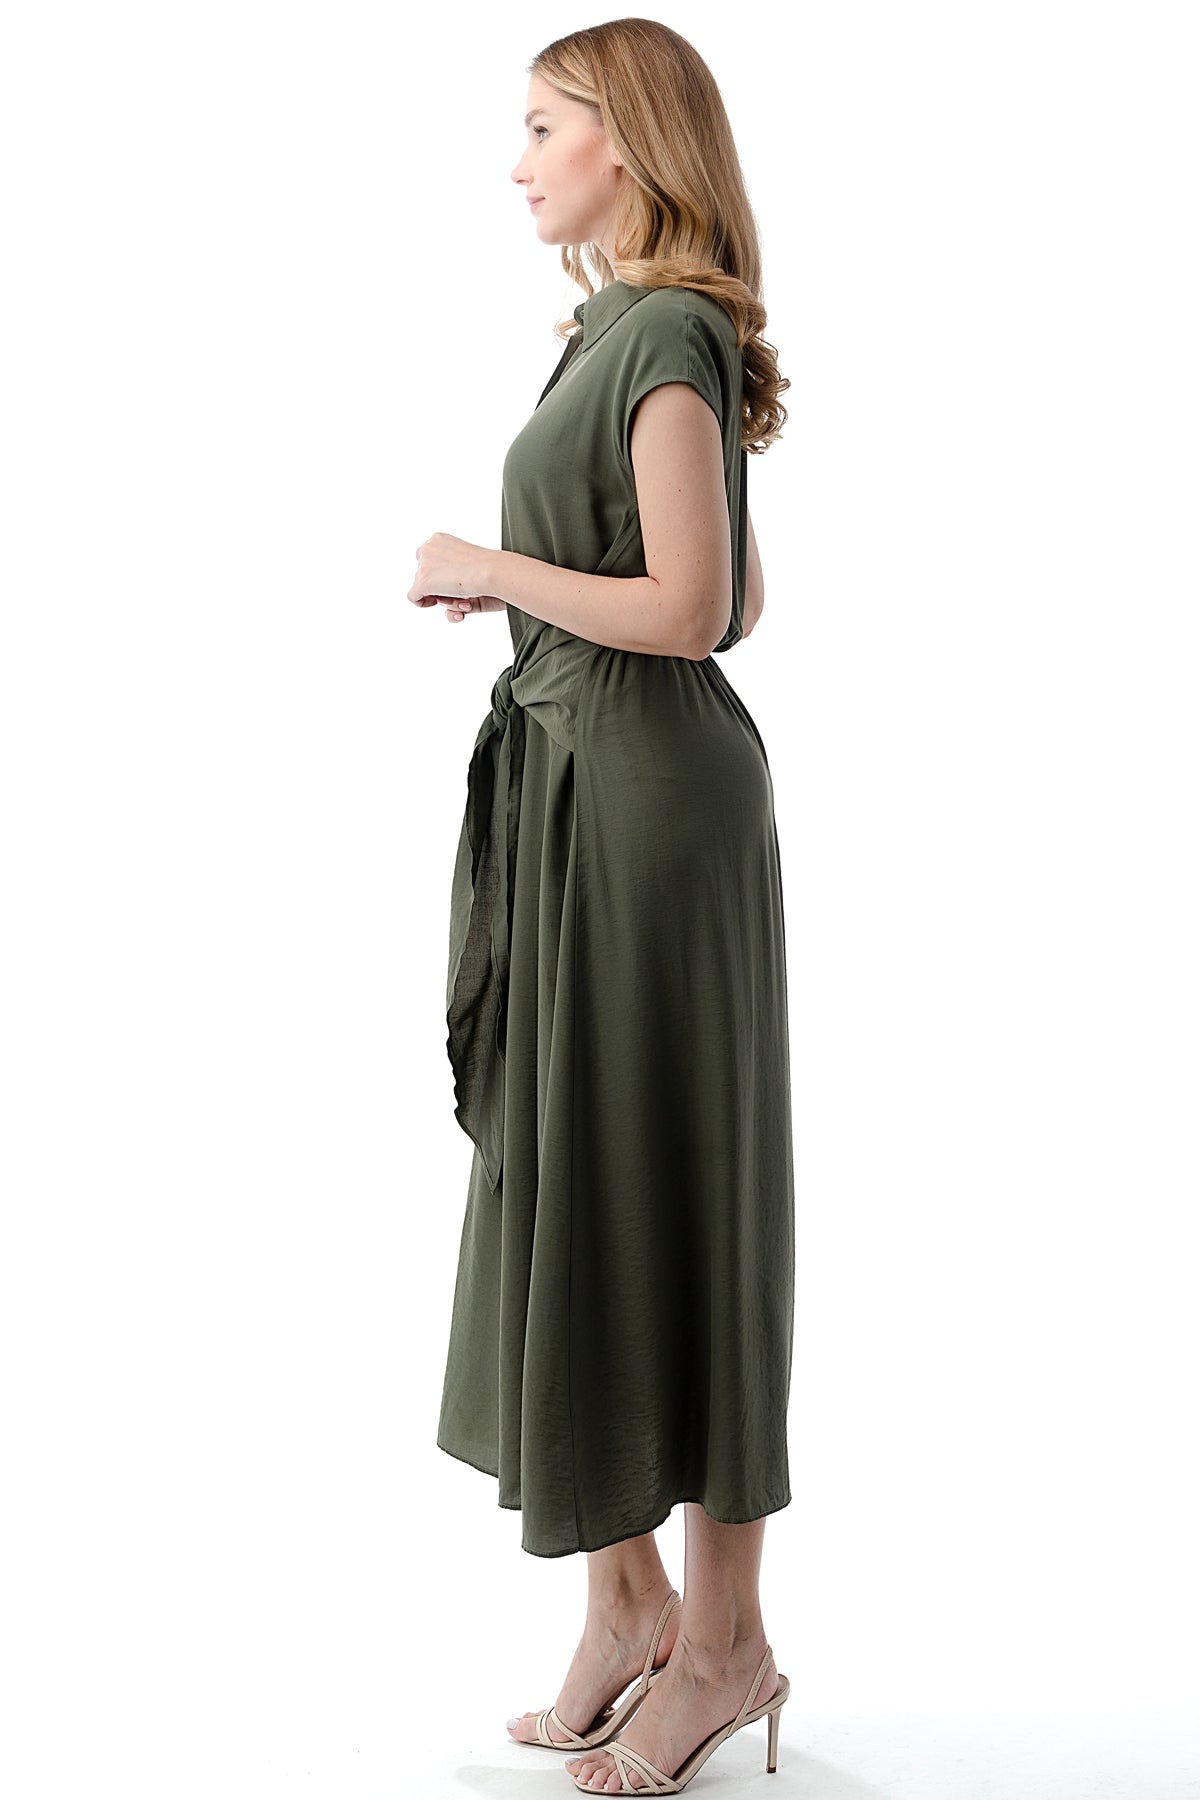 EDGY Land Girl's and Women's Cap Sleeve Collared Flowey Tea-length Dress with Waist Tie